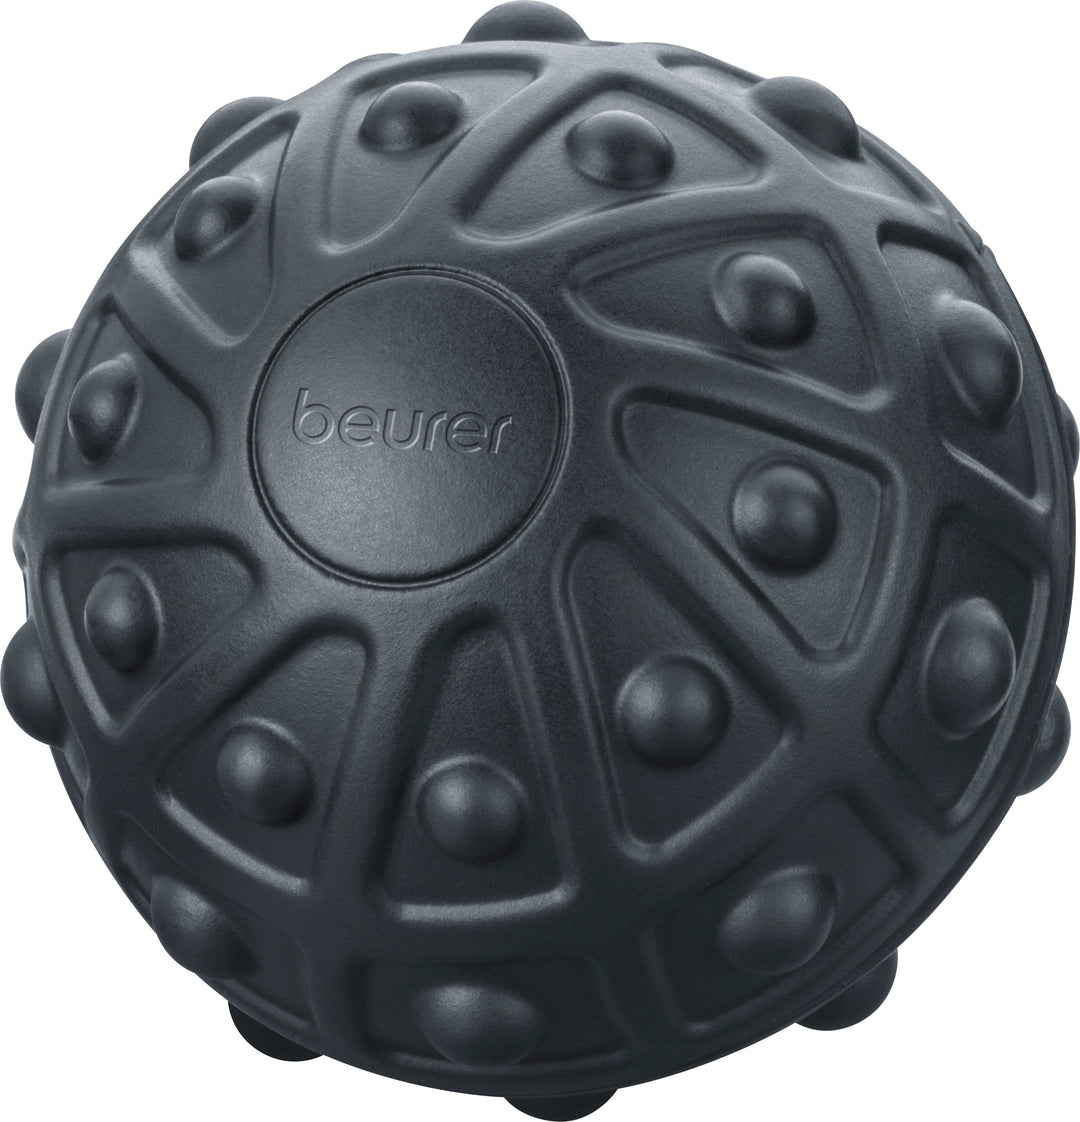 Beurer - Vibrating Massage Ball - Black_3